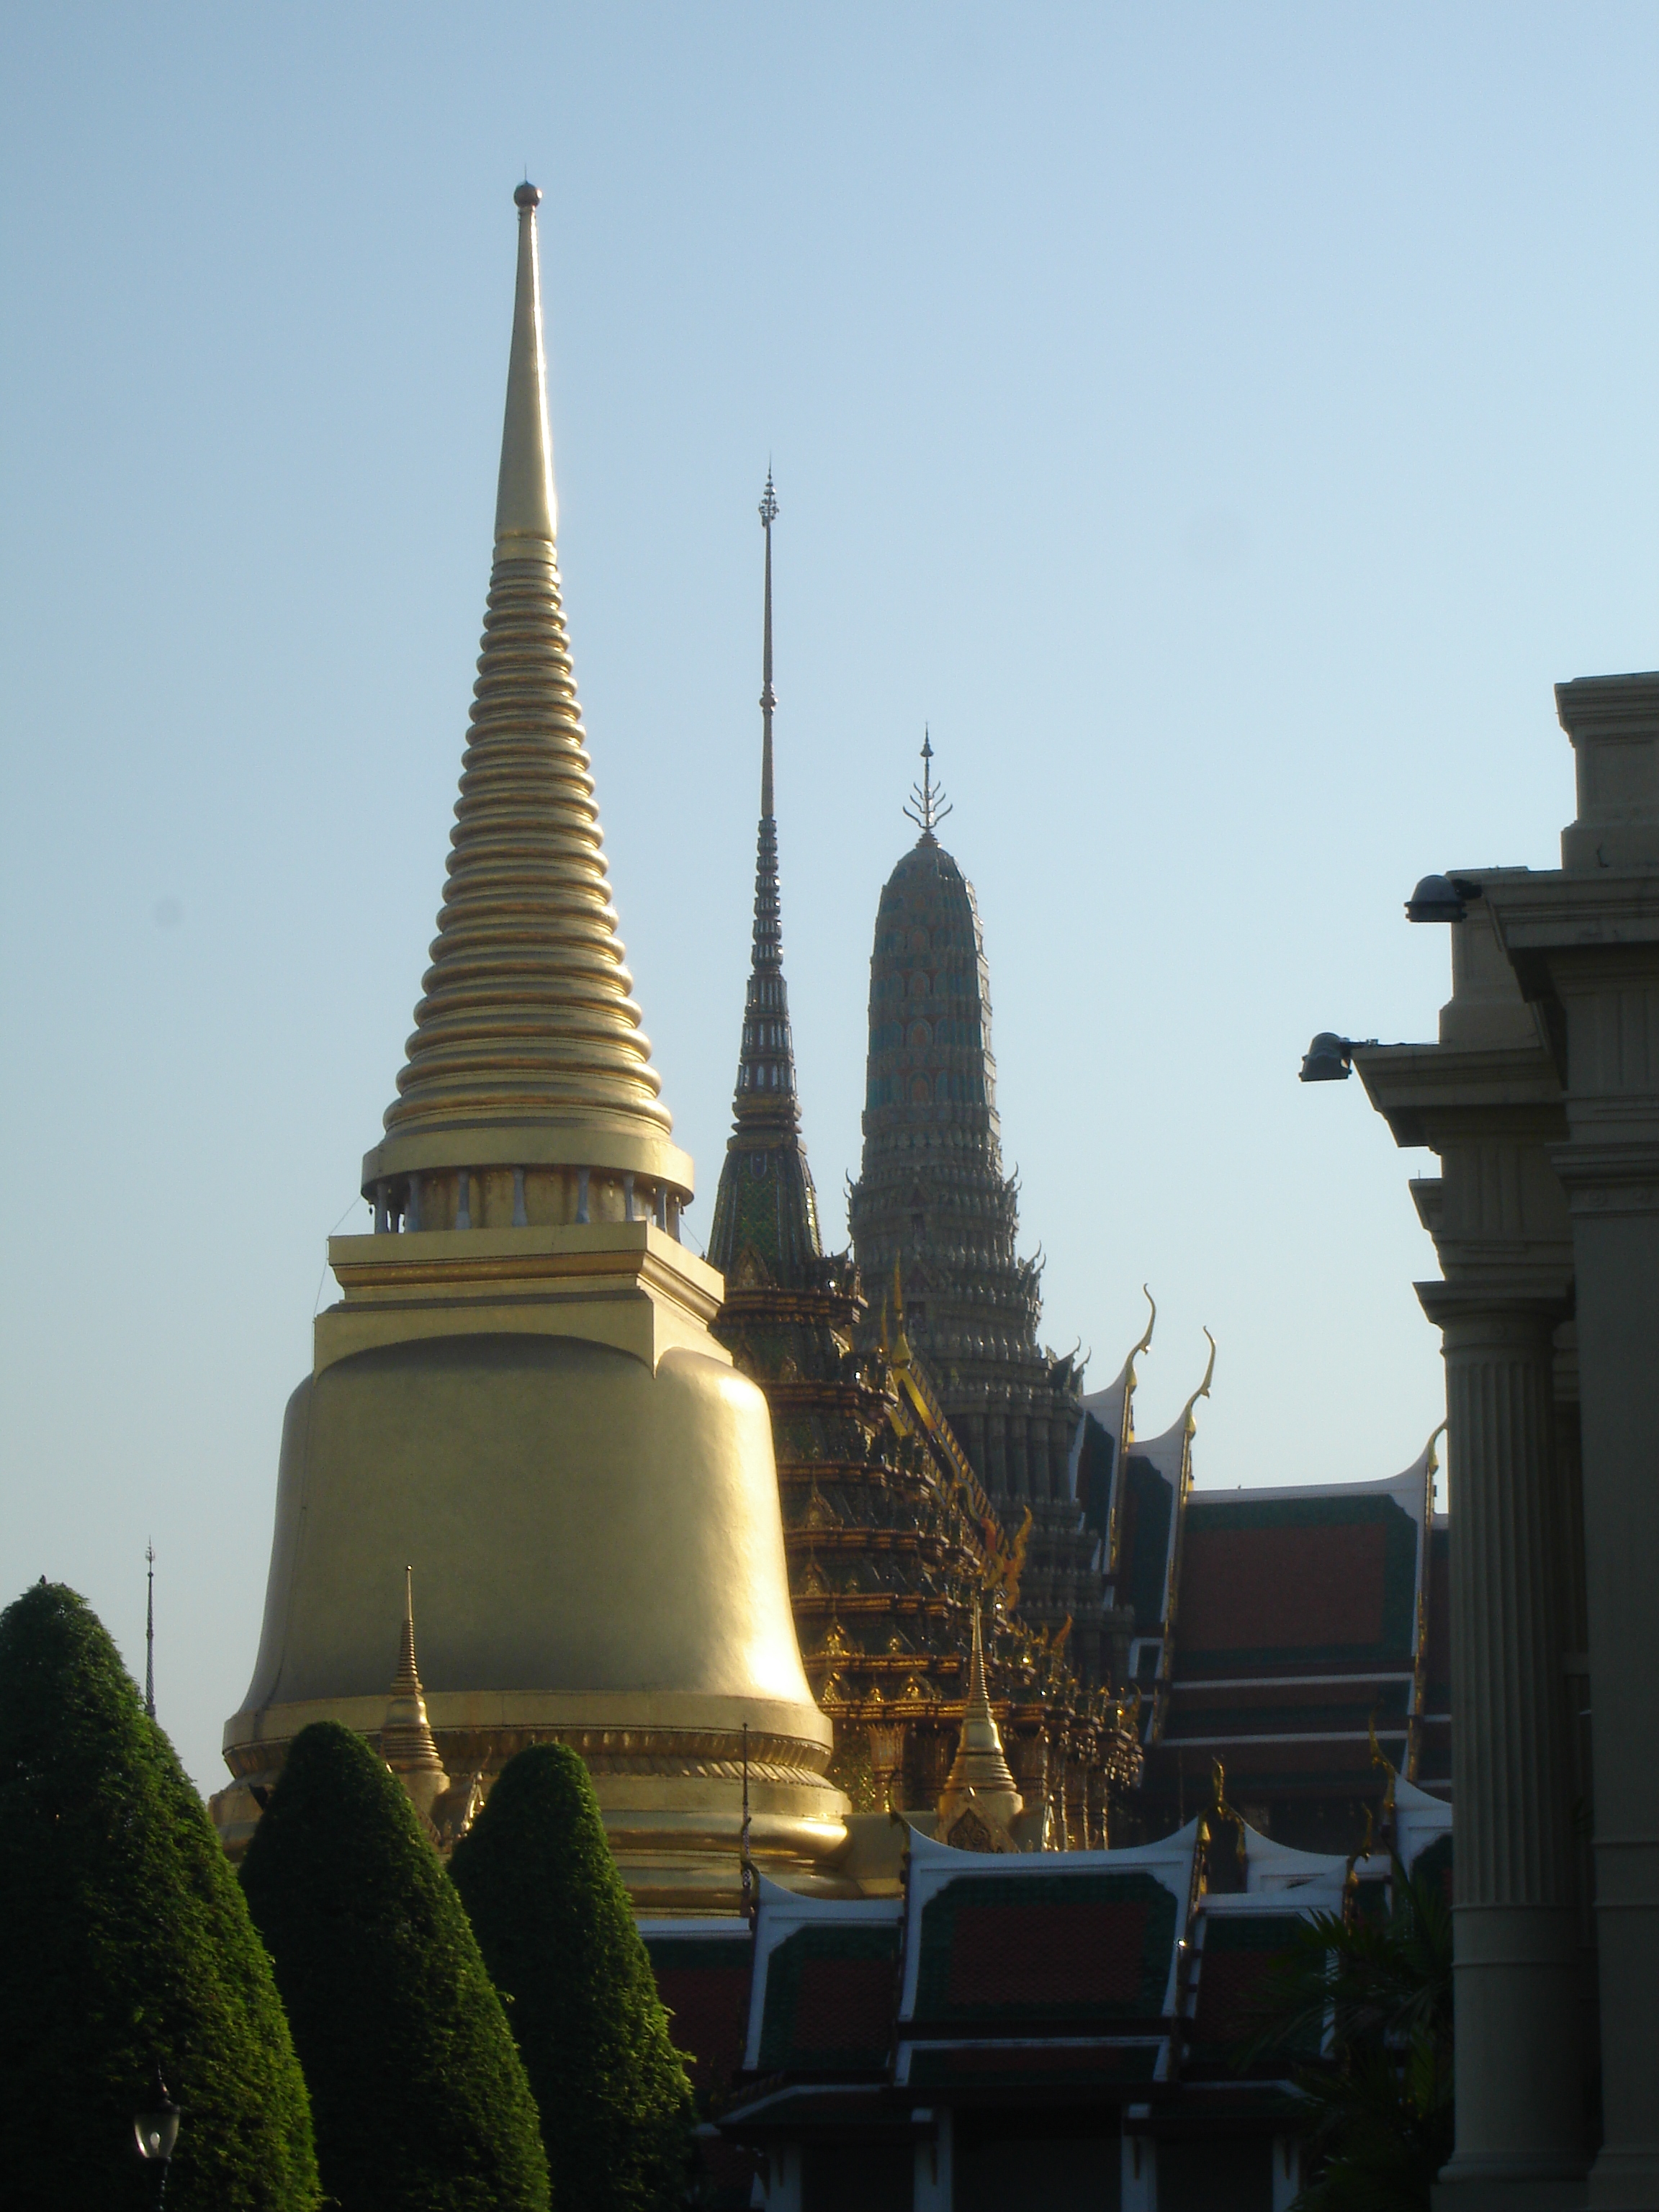 Grand Palace in Bangkok. Photo taken by Mark Jochim on January 8, 2006.